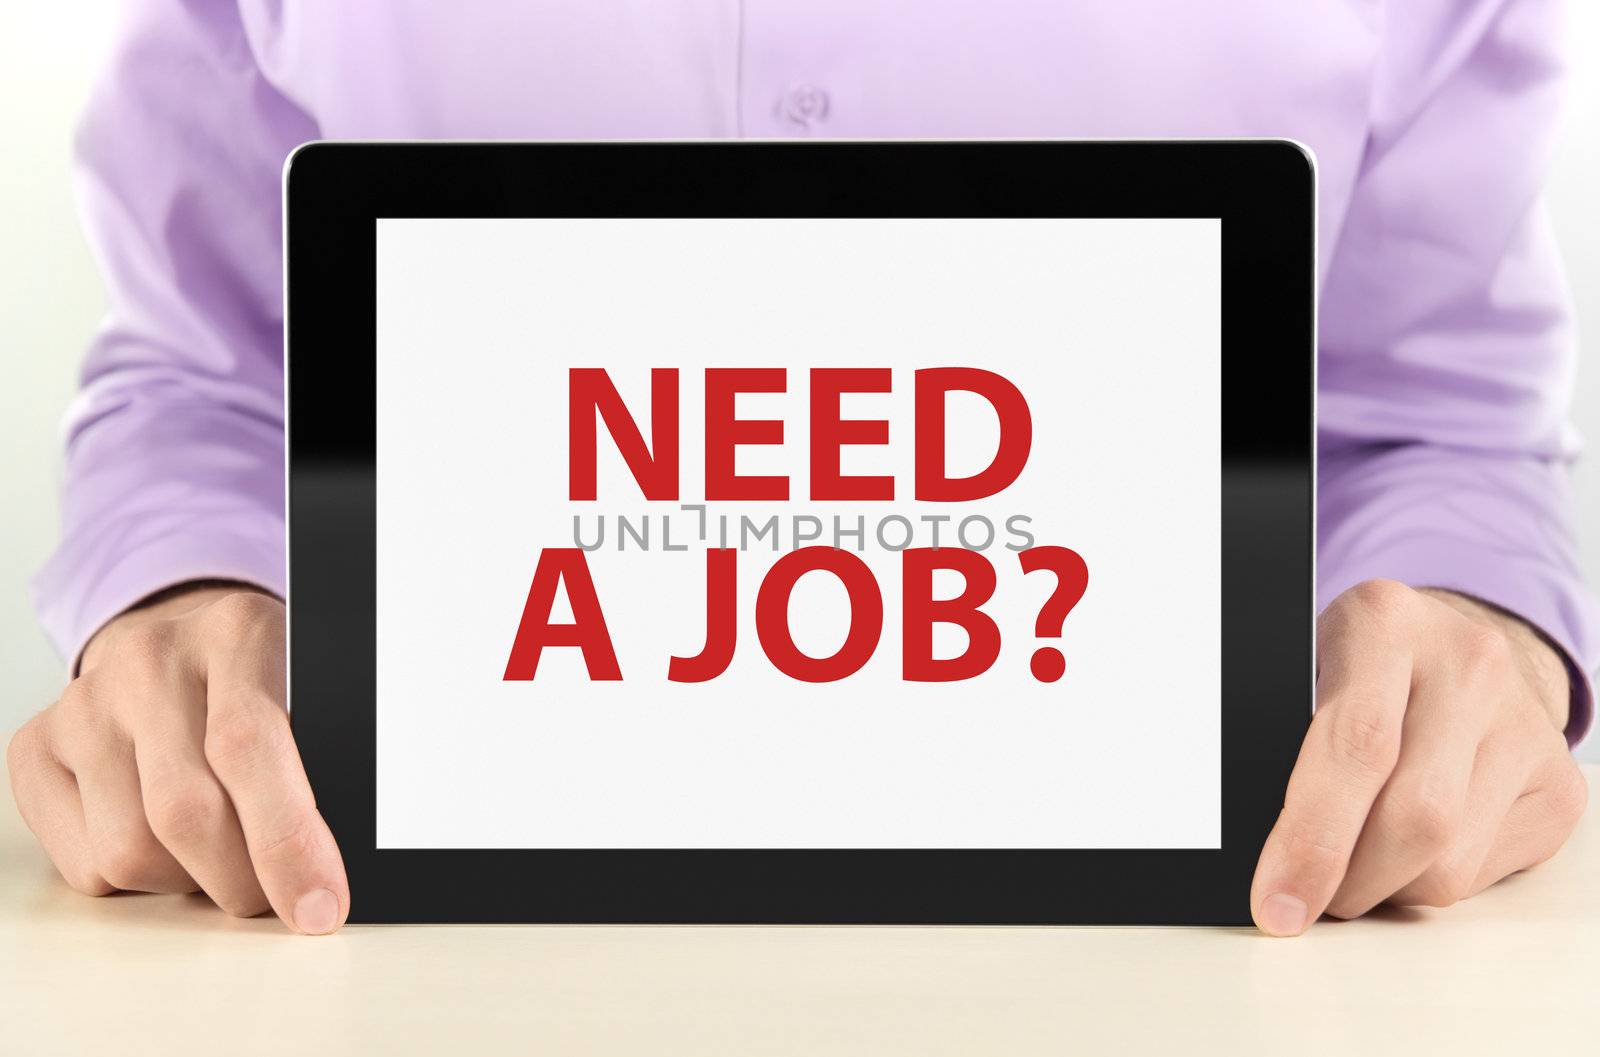 Need A Job? by bloomua